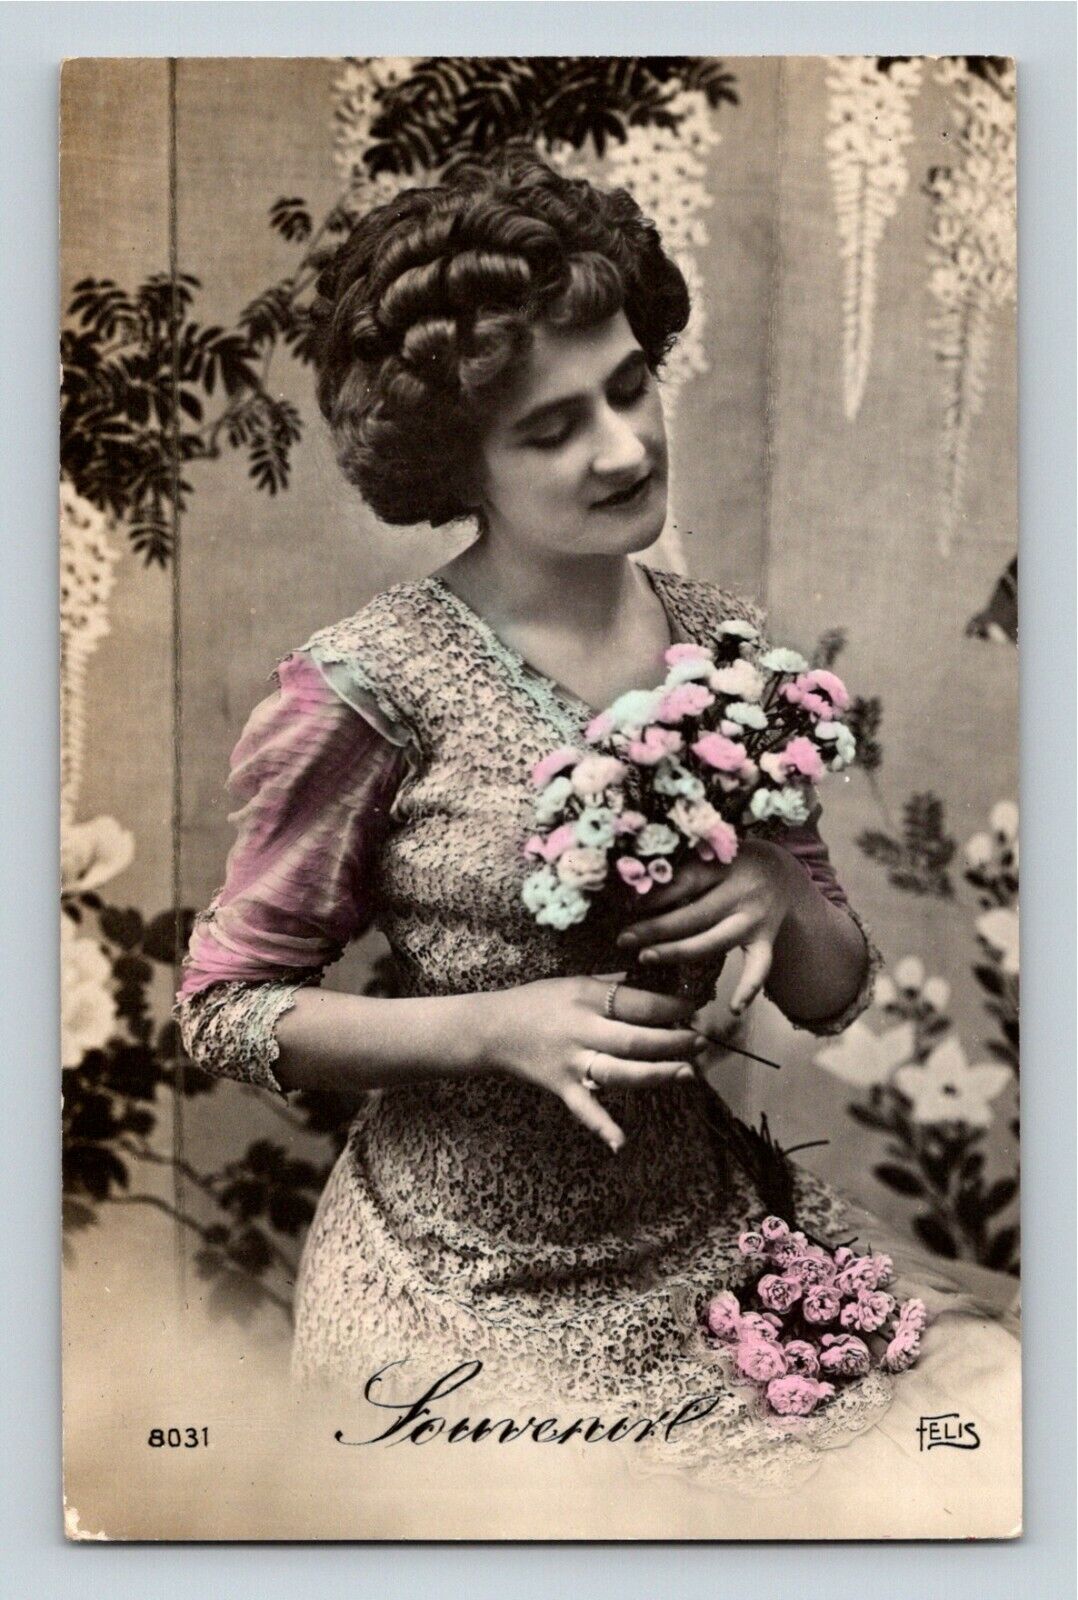 Woman with Curled Hair Parisian Dress Pink Blue Flowers Souvenir RPPC Felis 